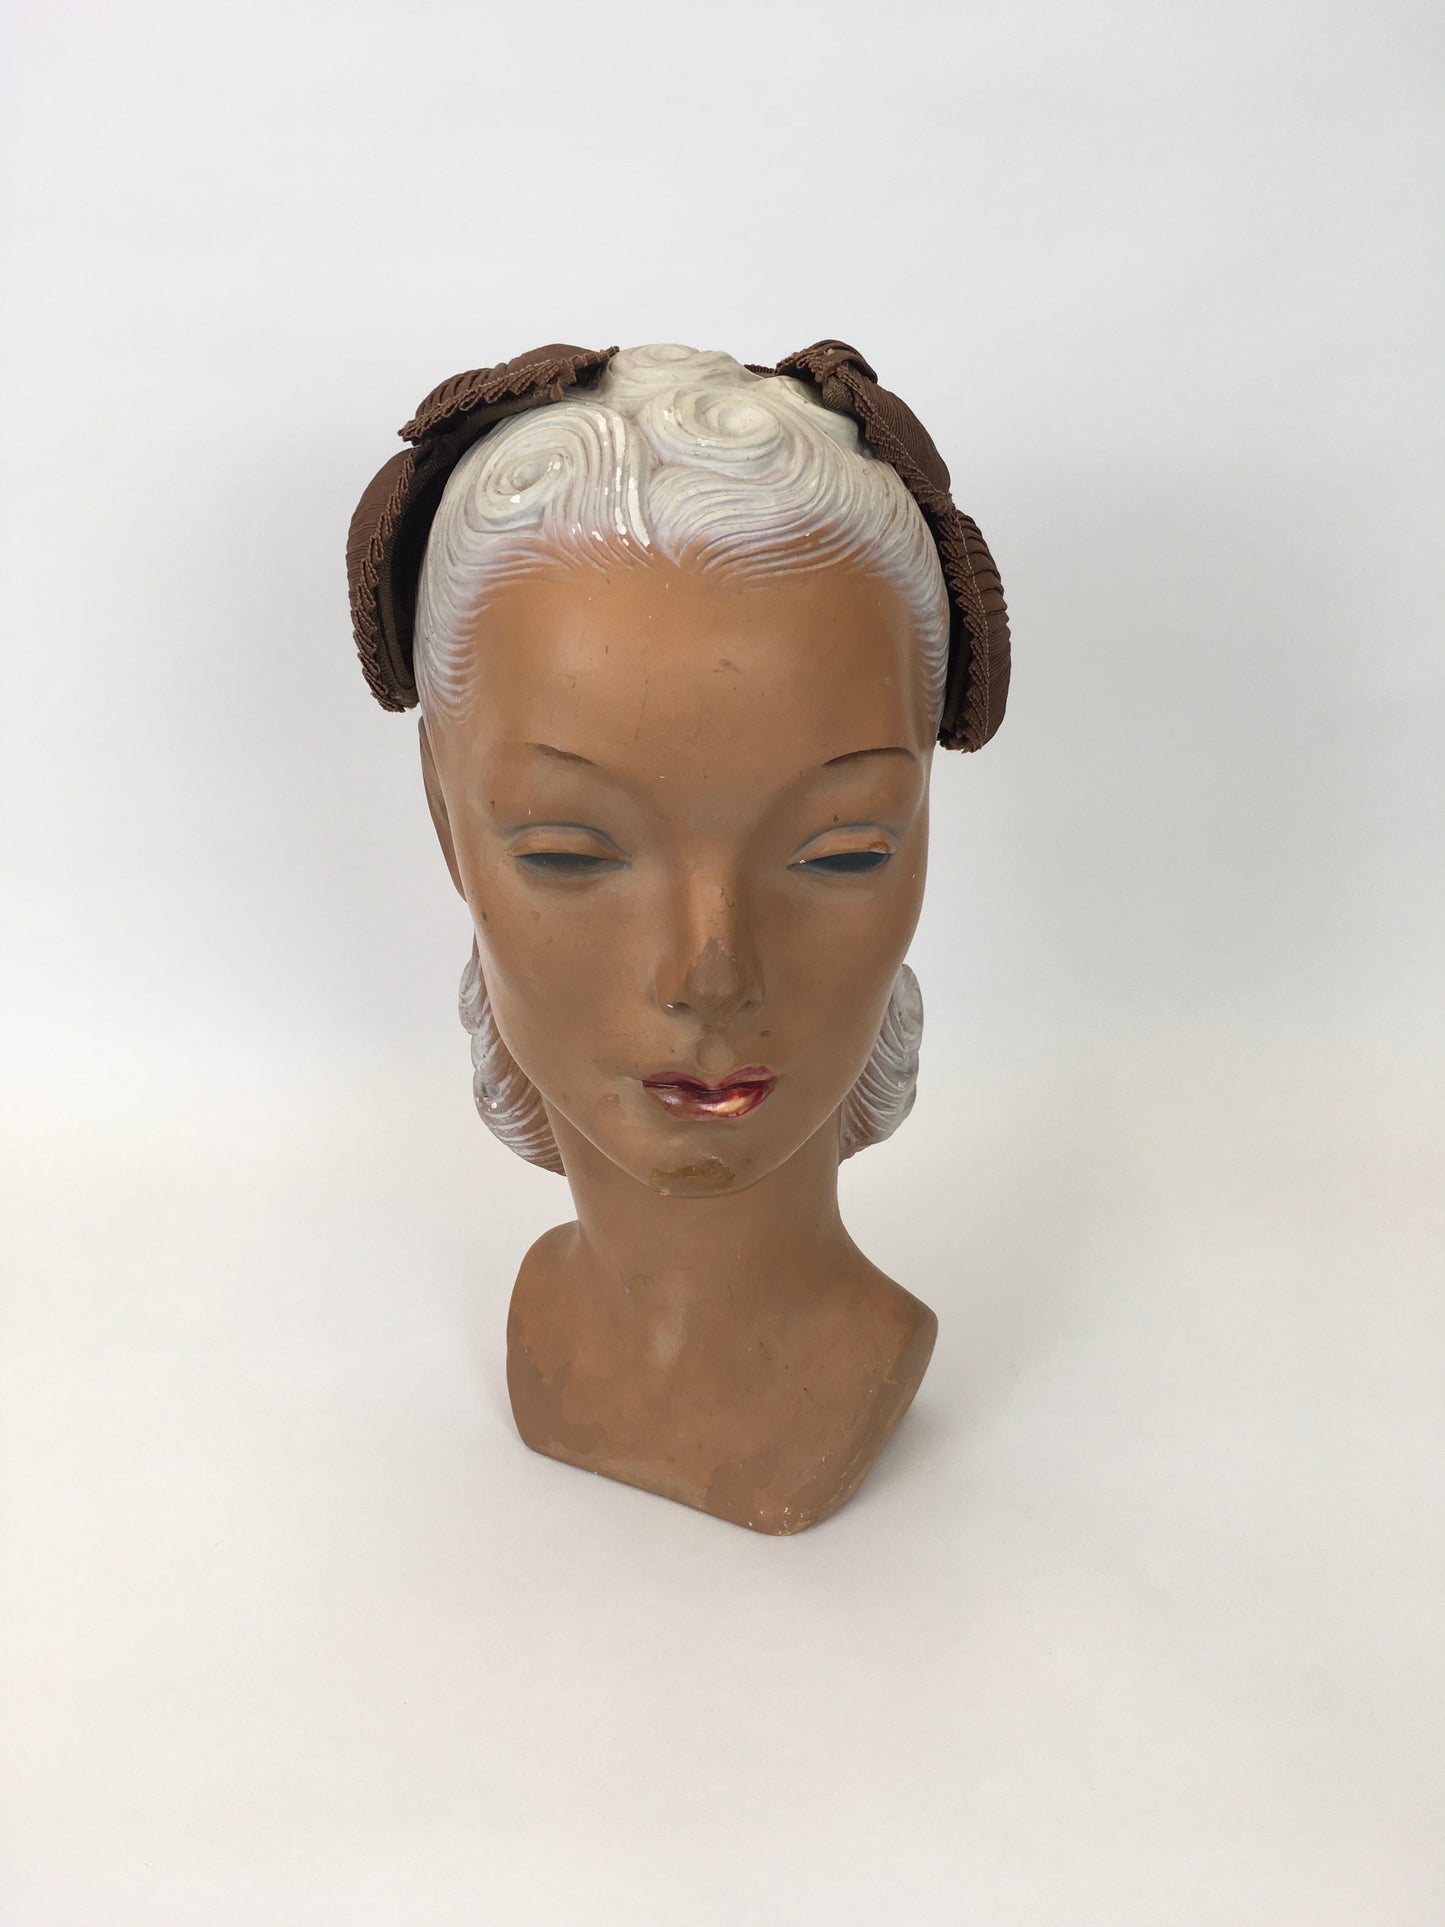 Original 1950s Darling Soft Brown Grosgrain Headpiece - Wire Construction With Hand Pleated Grosgrain Swirls